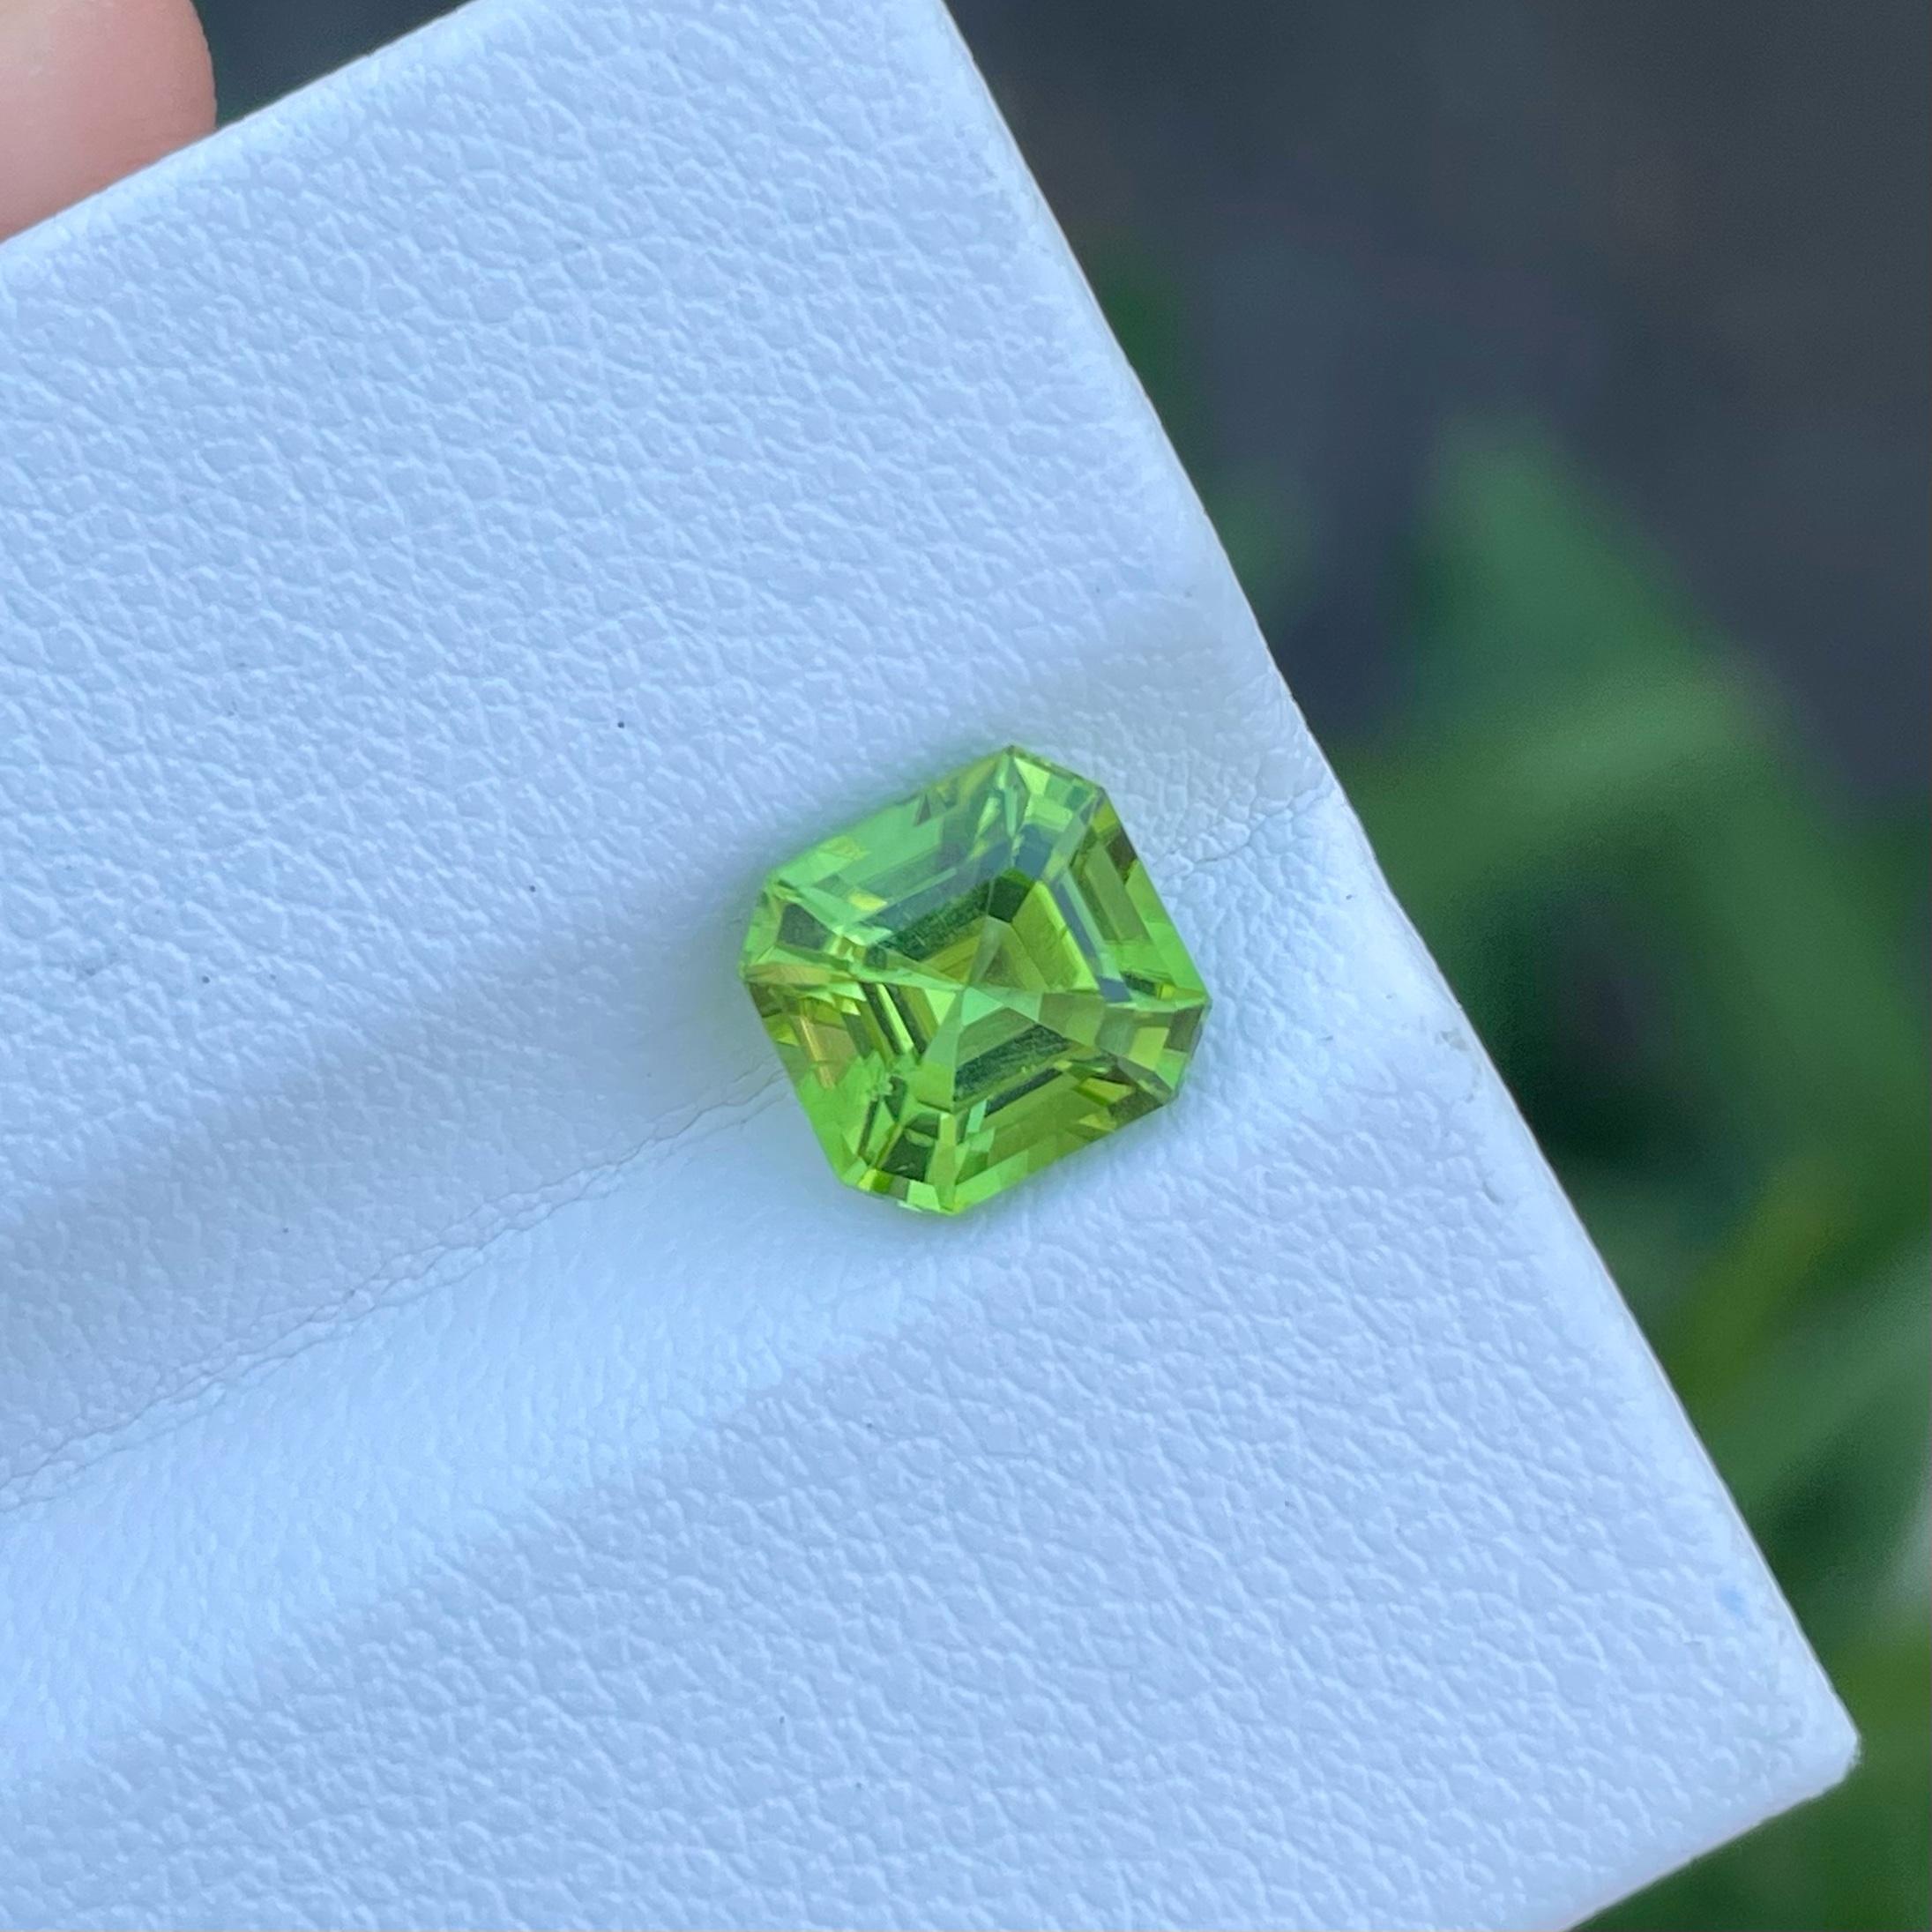 Emerald Cut The Luminous Beauty of Apple Green Peridot Stones A Sparkle of Nature's Renewal